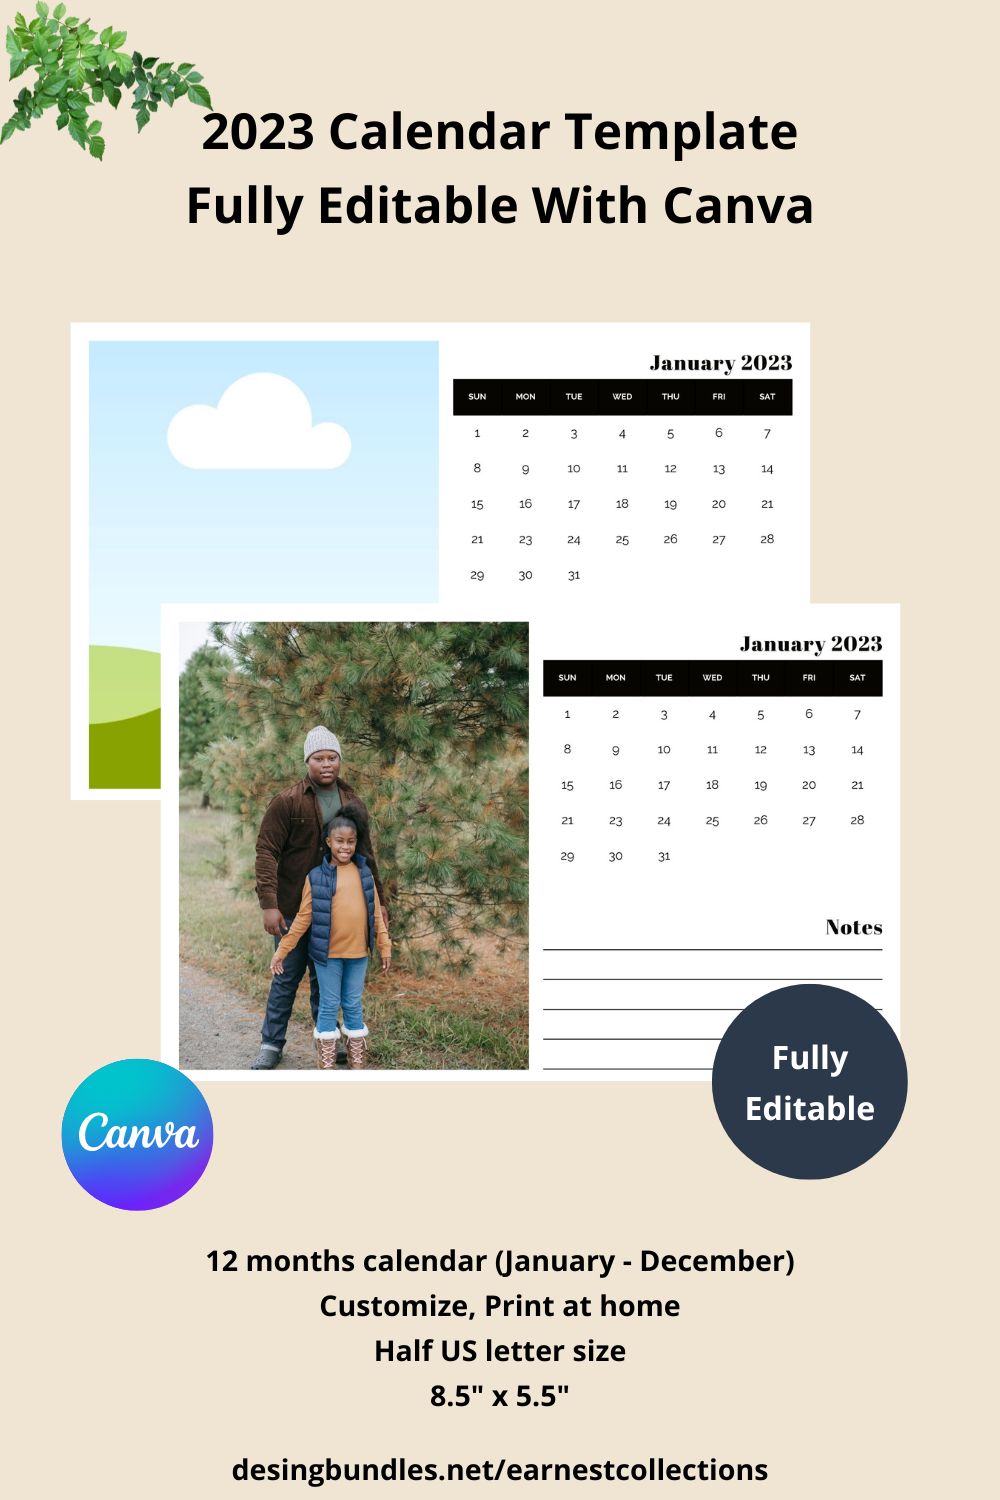 Monthly Desk Calendar Template Fully Editable pinterest image.